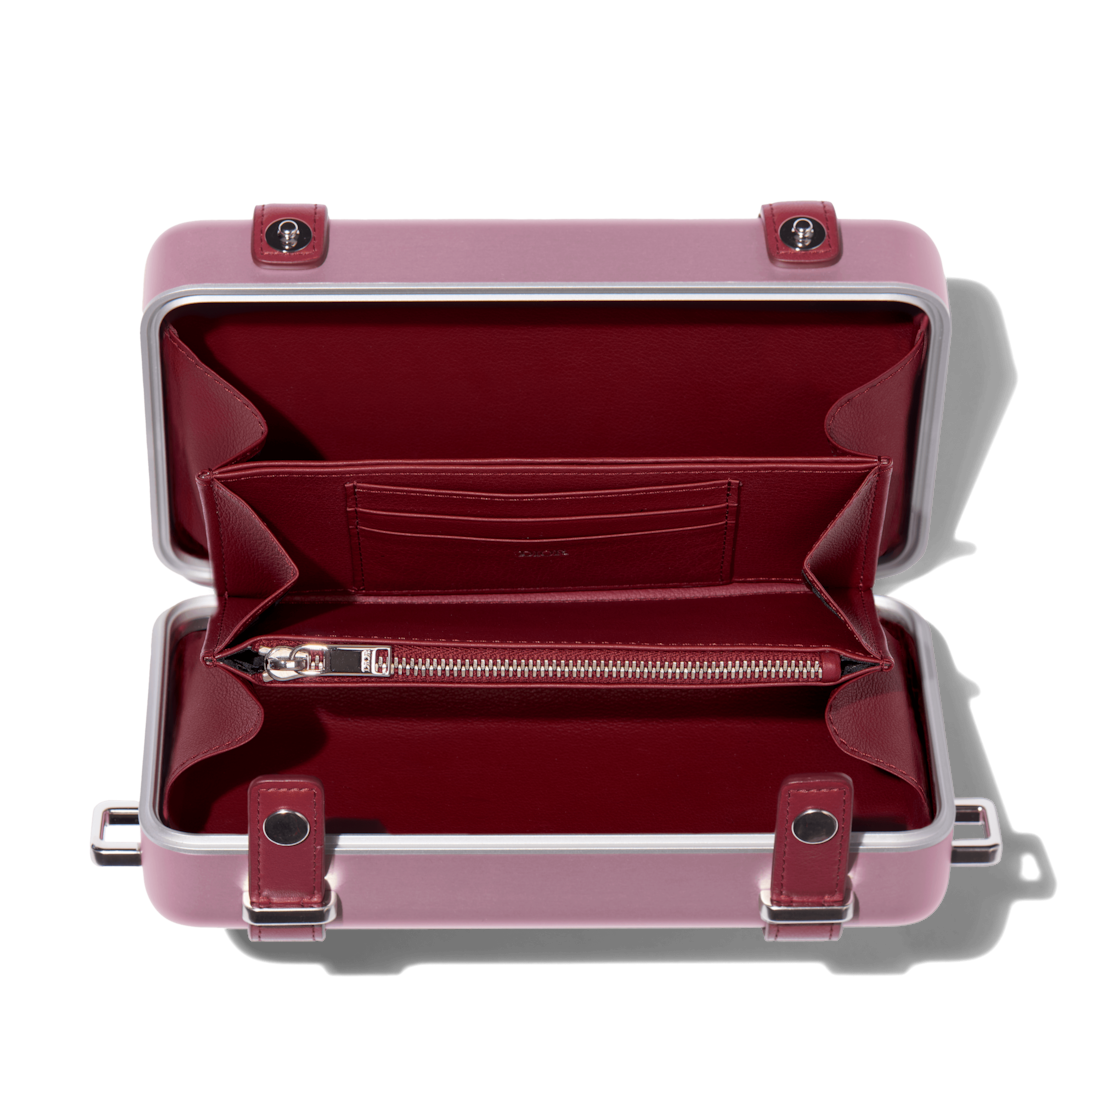 DIOR and RIMOWA Personal Cross-Body Clutch Bag in Pink | RIMOWA